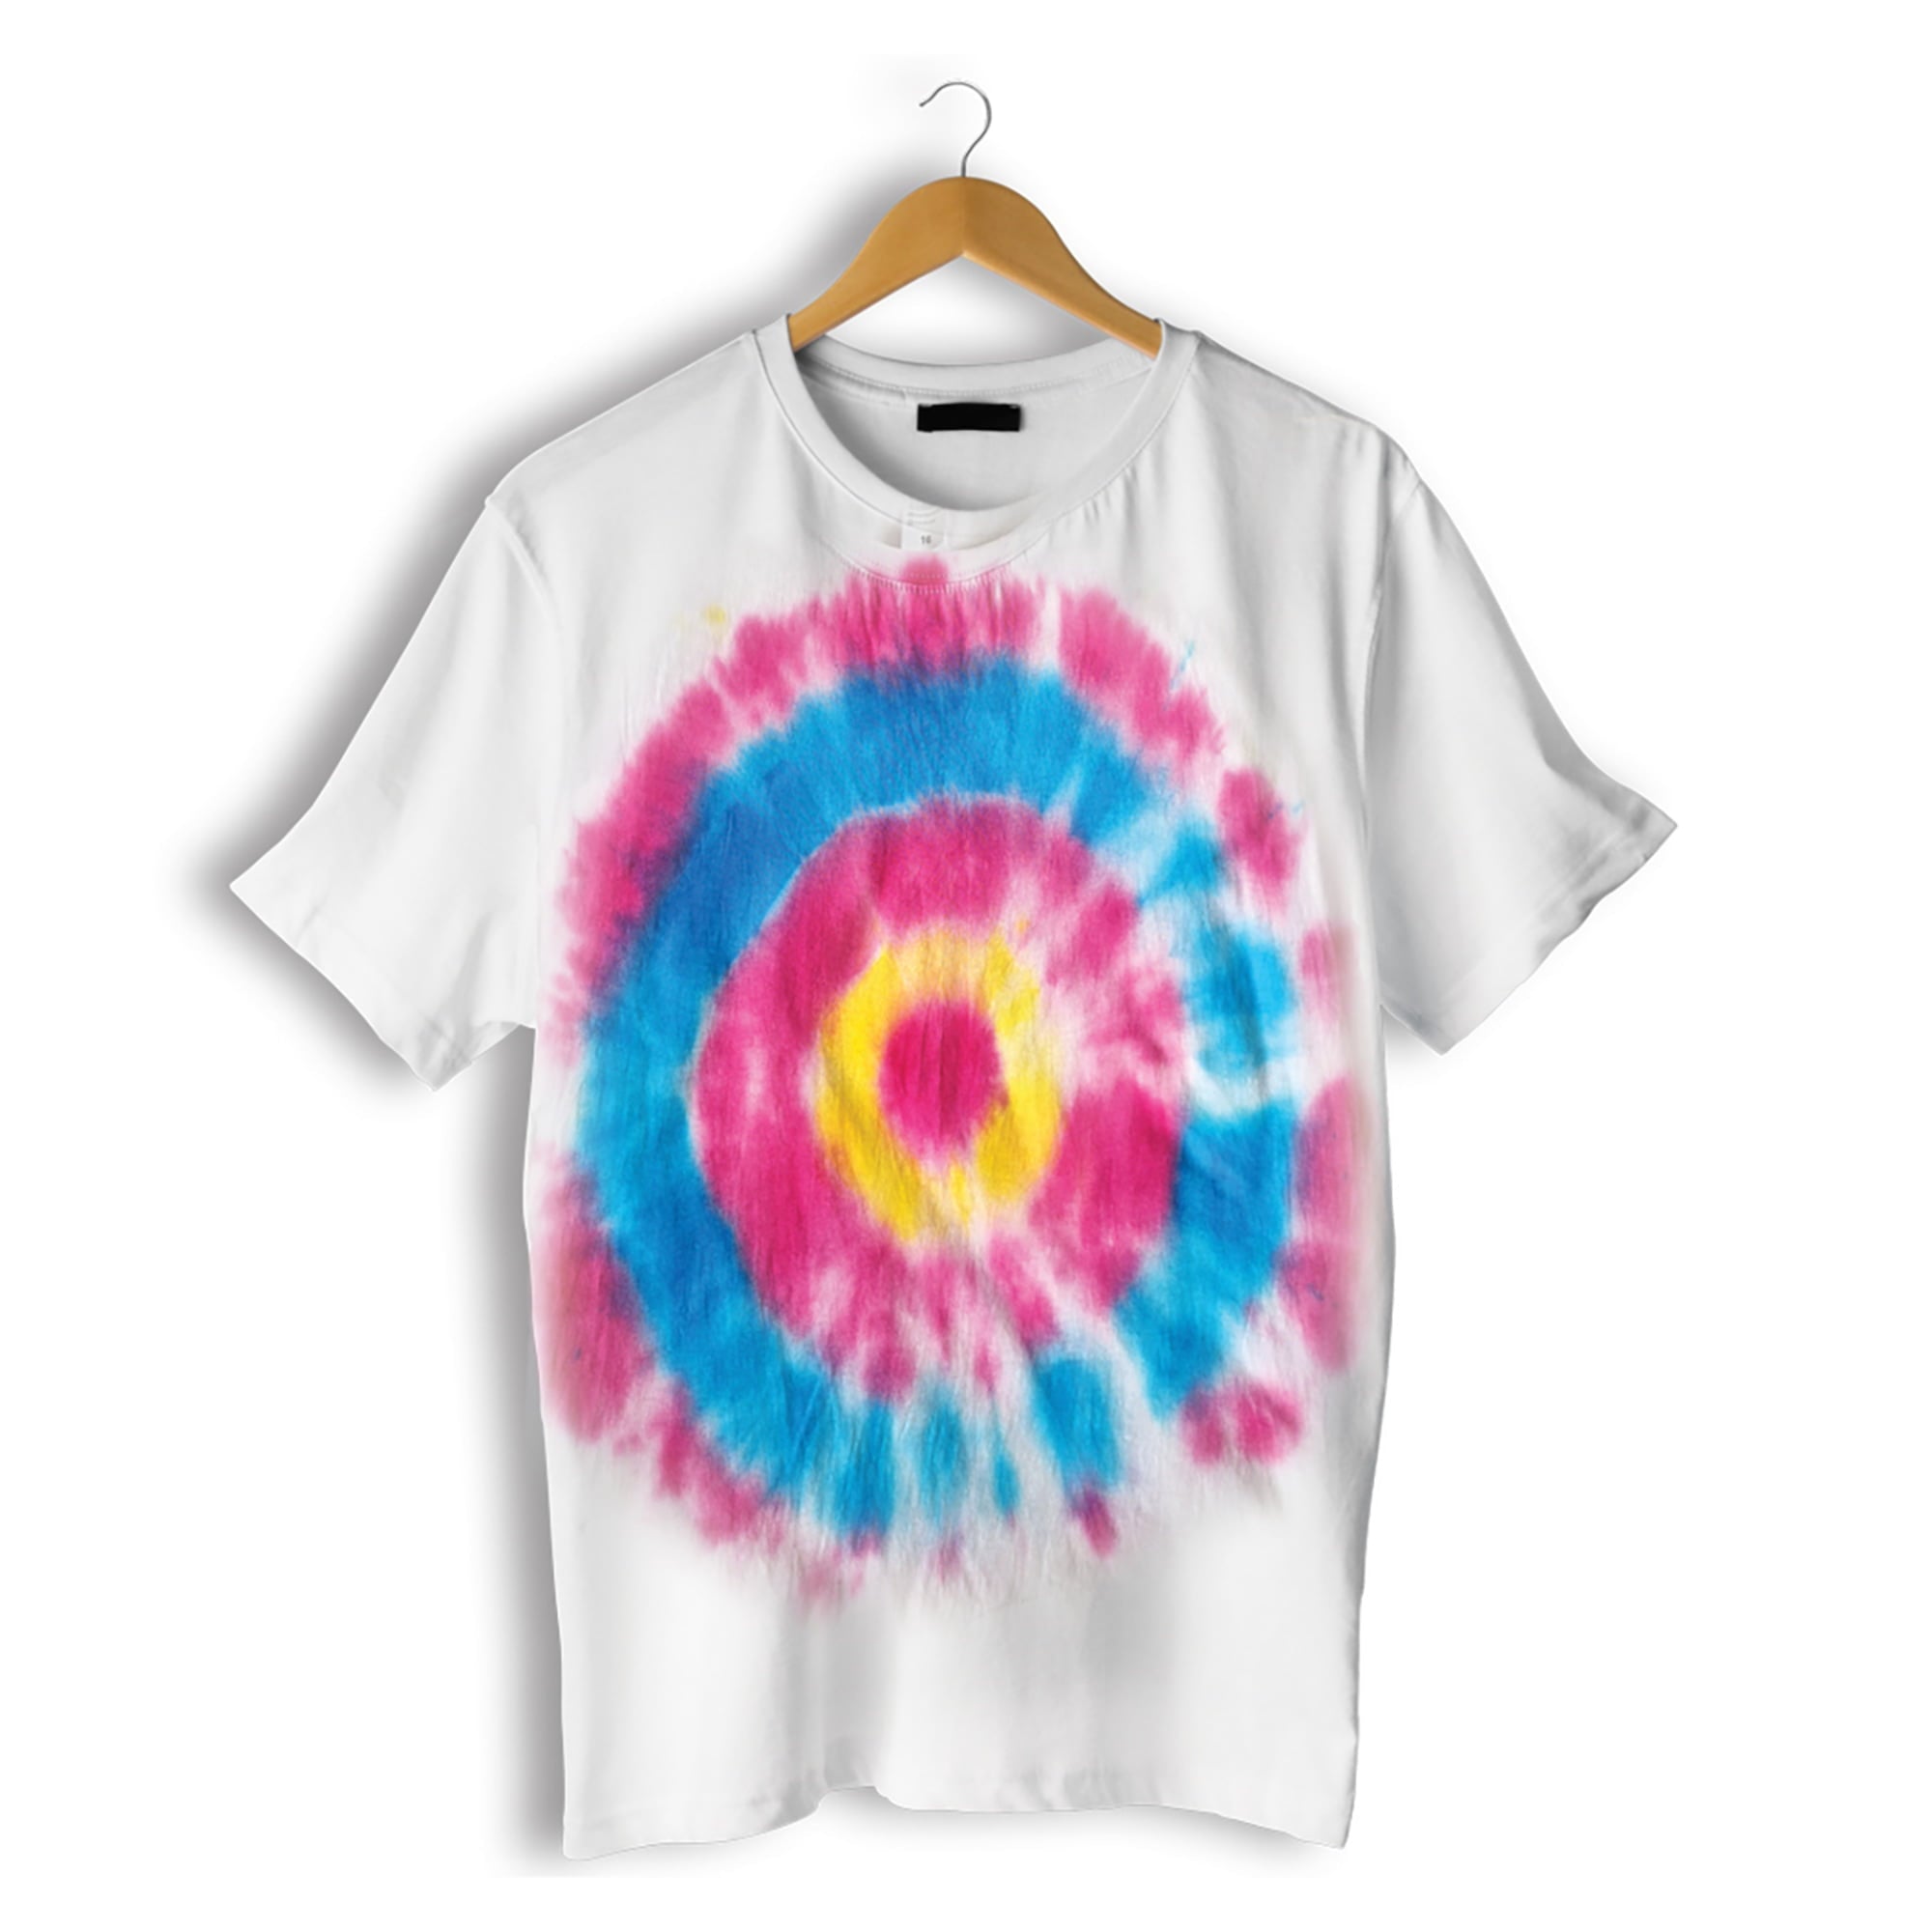 AMAV Fashion Time Tye Dye T-Shirt Kit, Everything You Need to Make a Tie Dye T-Shirt, Children Ages 8 andUp